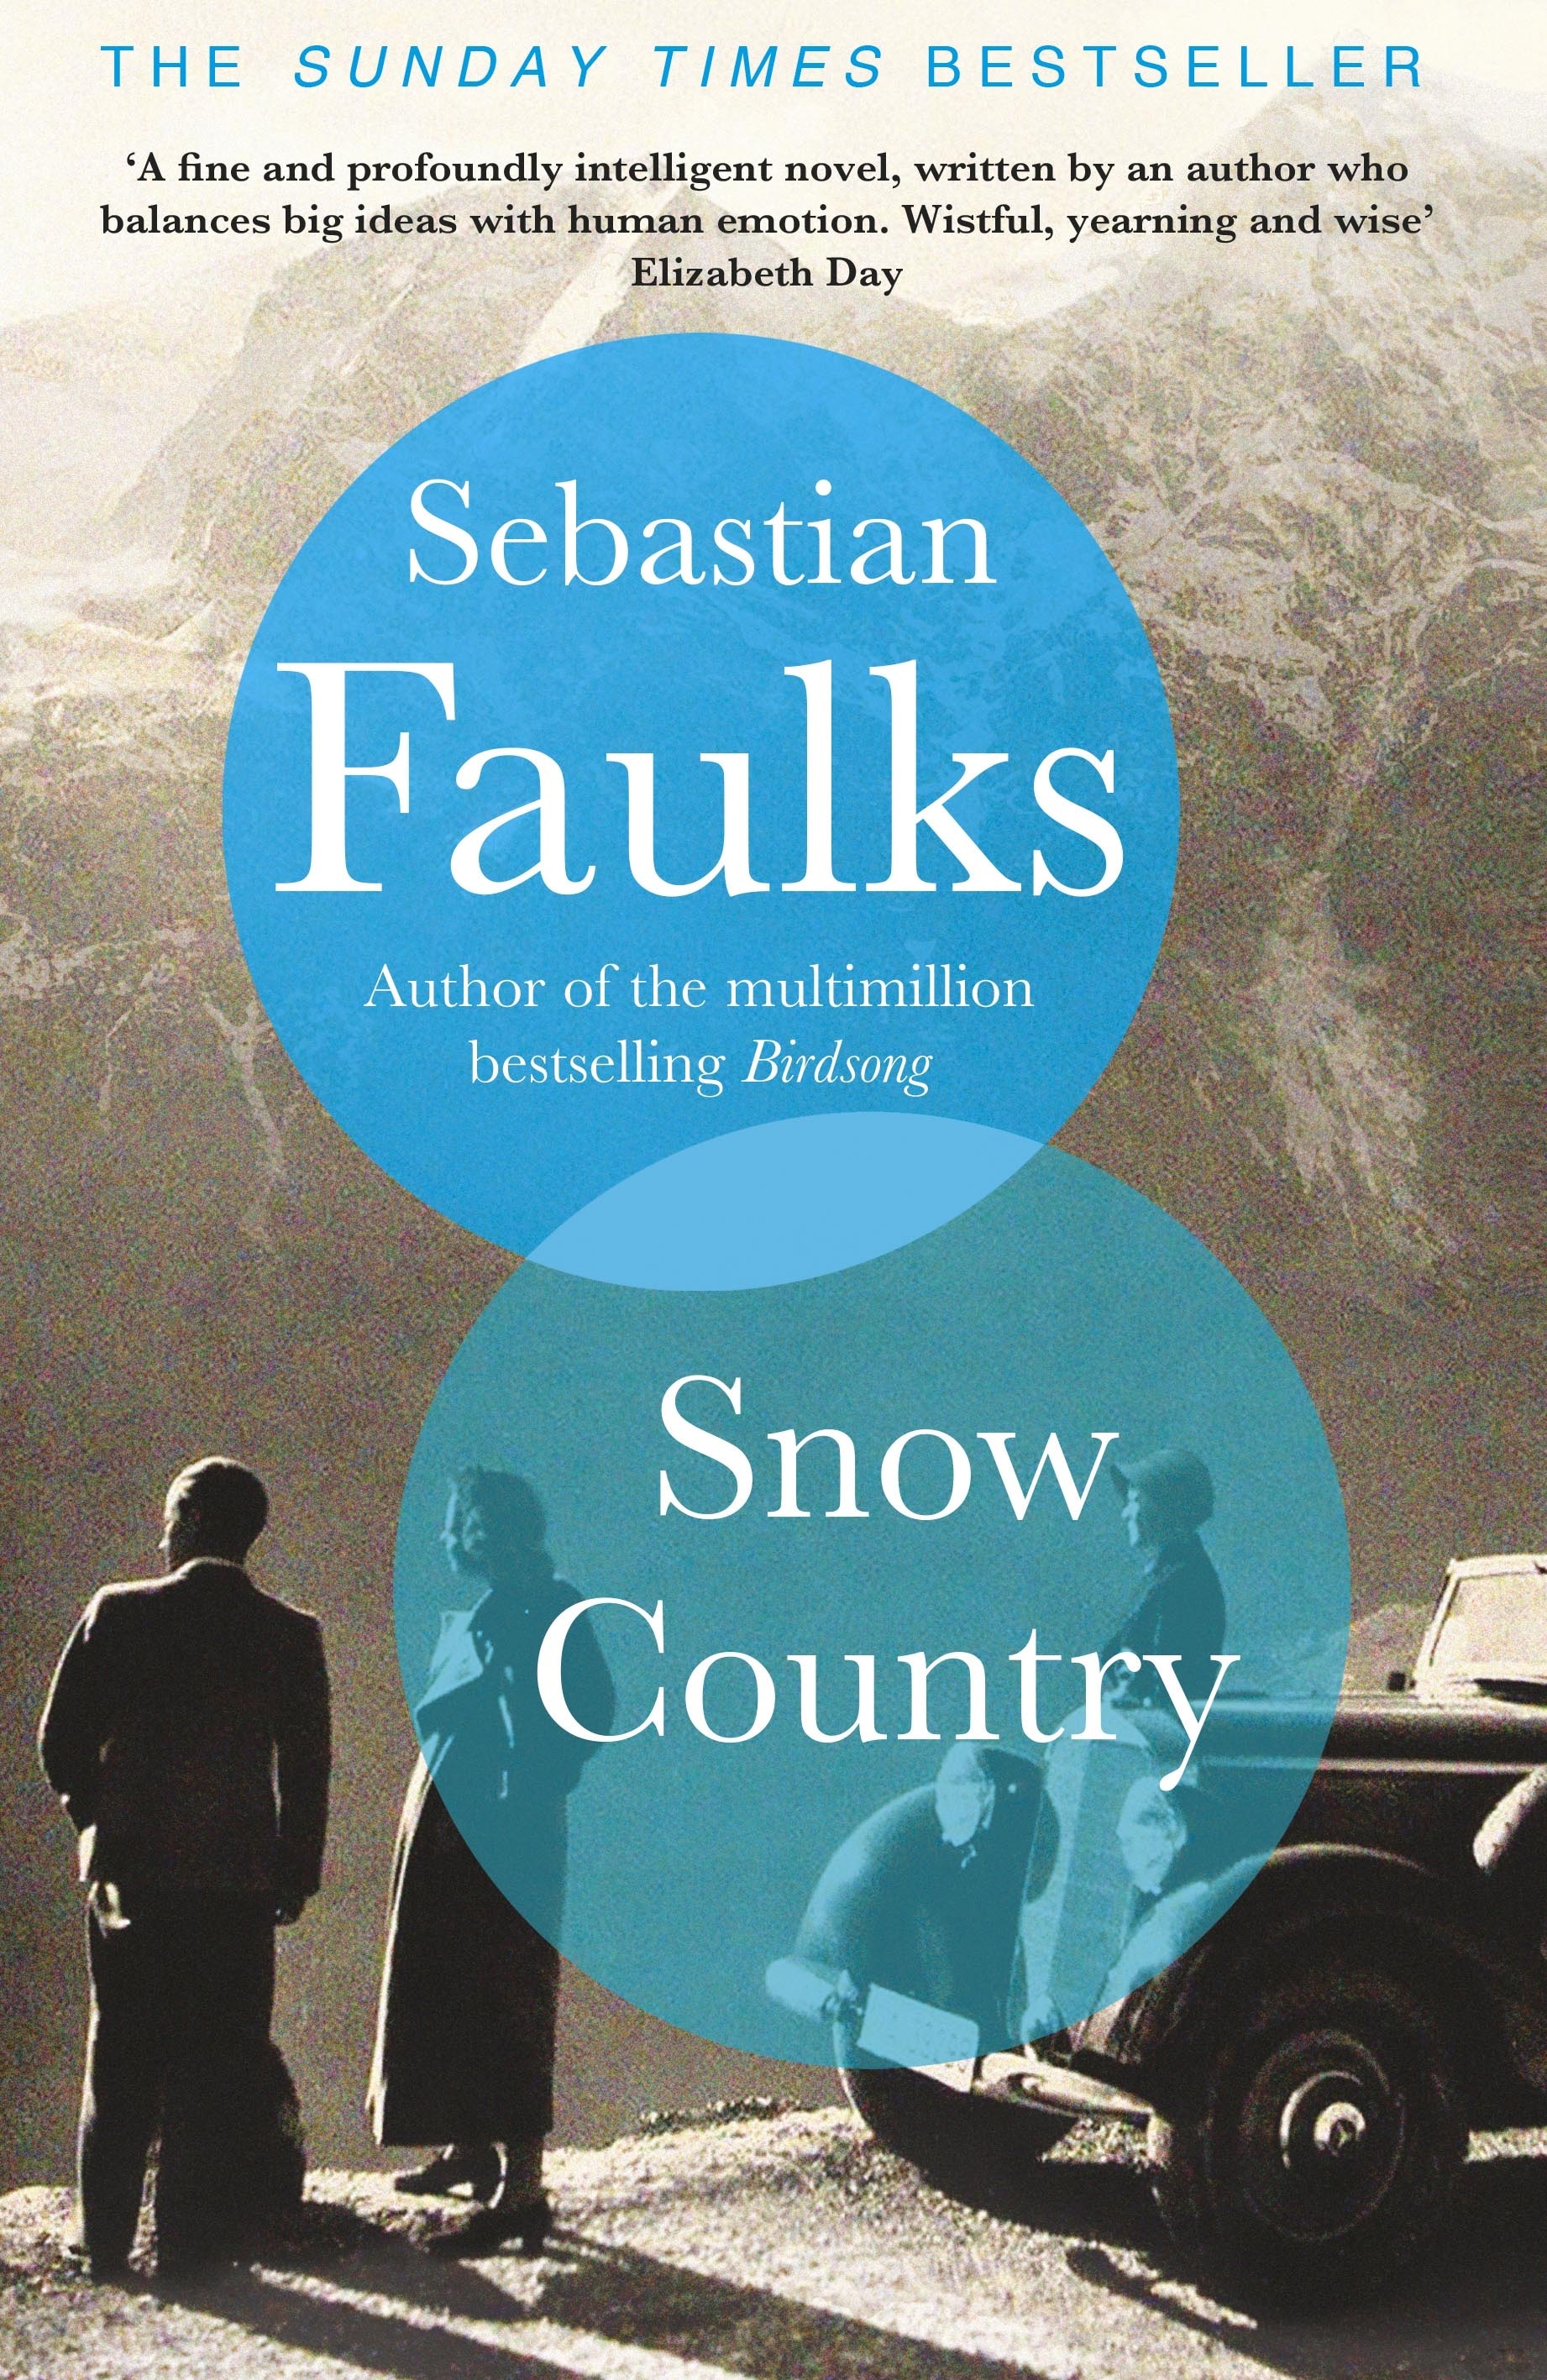 Book “Snow Country” by Sebastian Faulks — September 2, 2021